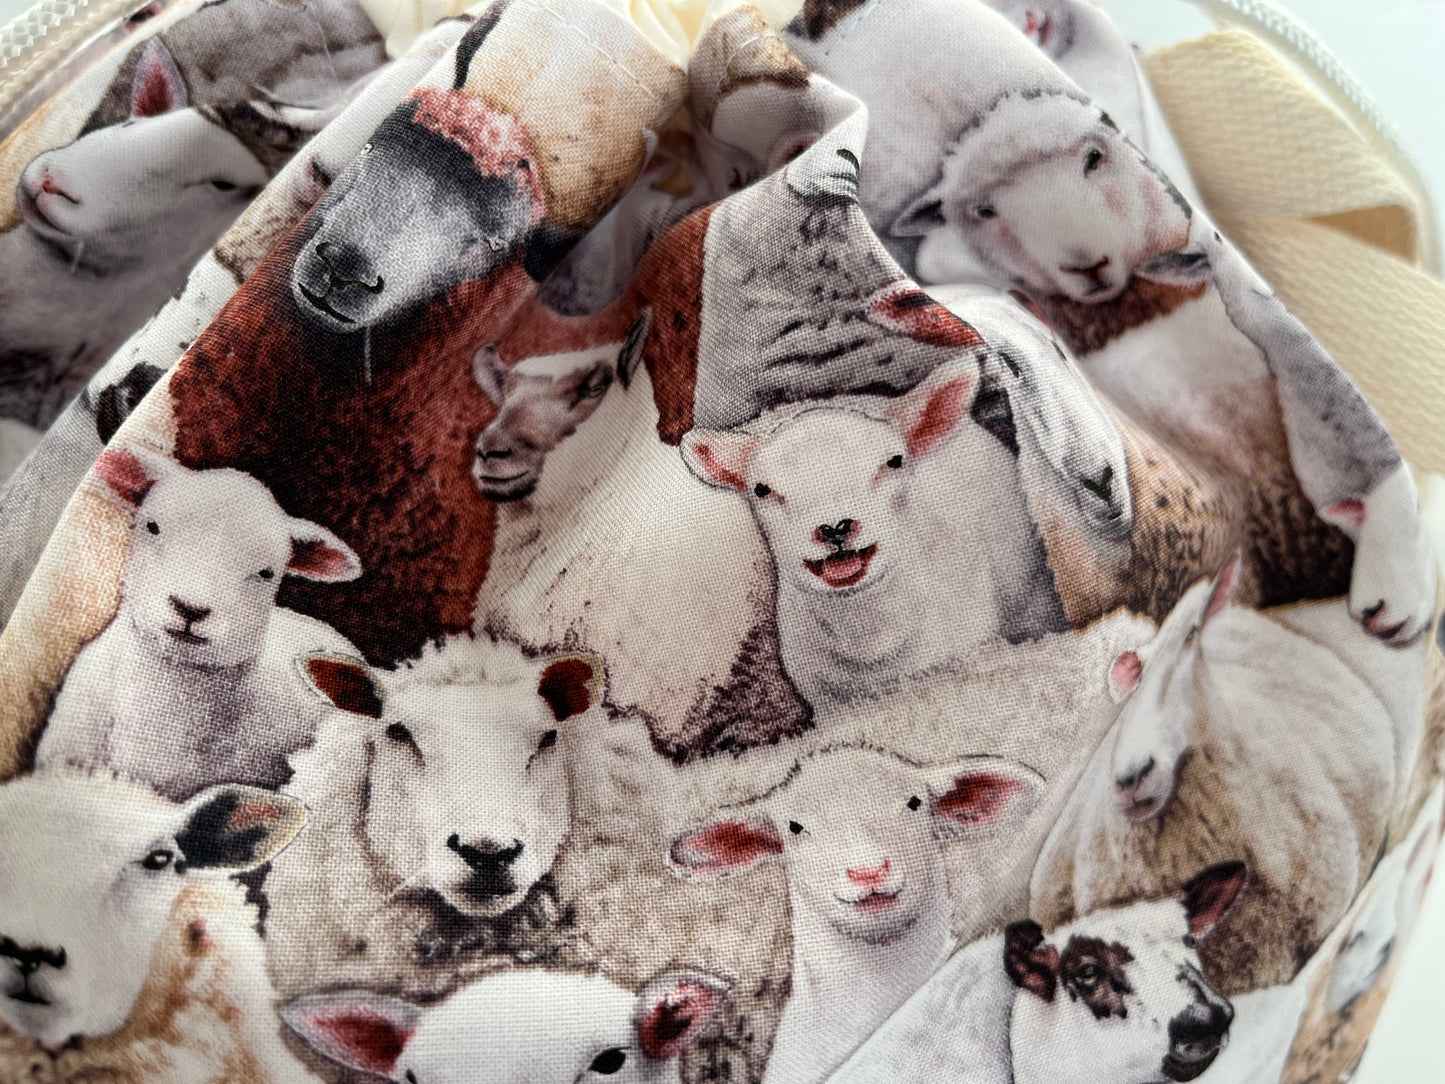 Sheep Themed Knitting Project Bag, Large Knitting Bag